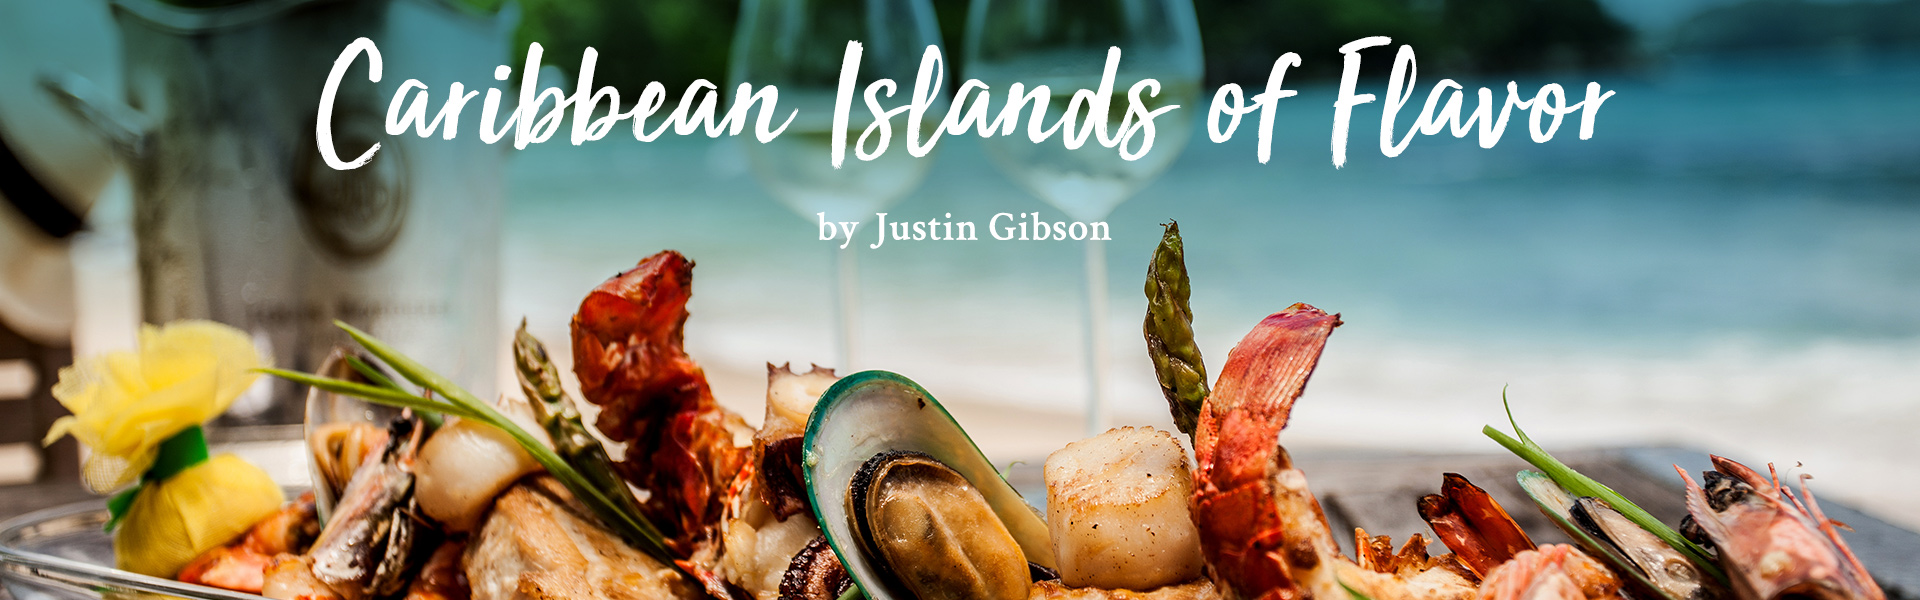 Caribbeanb Islands of Flavor